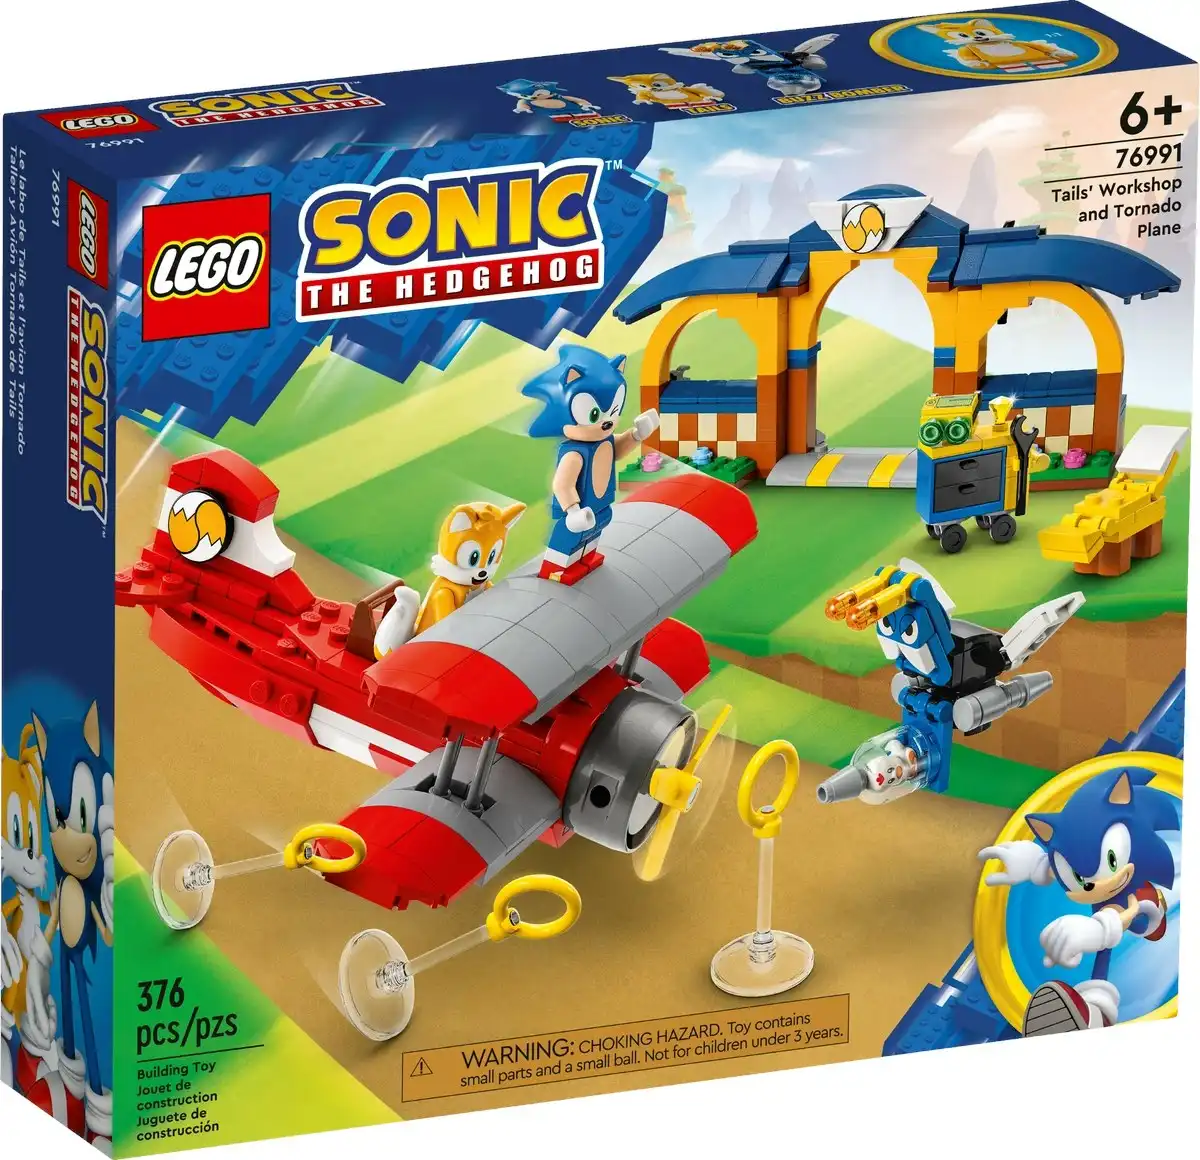 LEGO 76991 Tails' Workshop and Tornado Plane - Sonic the Hedgehog